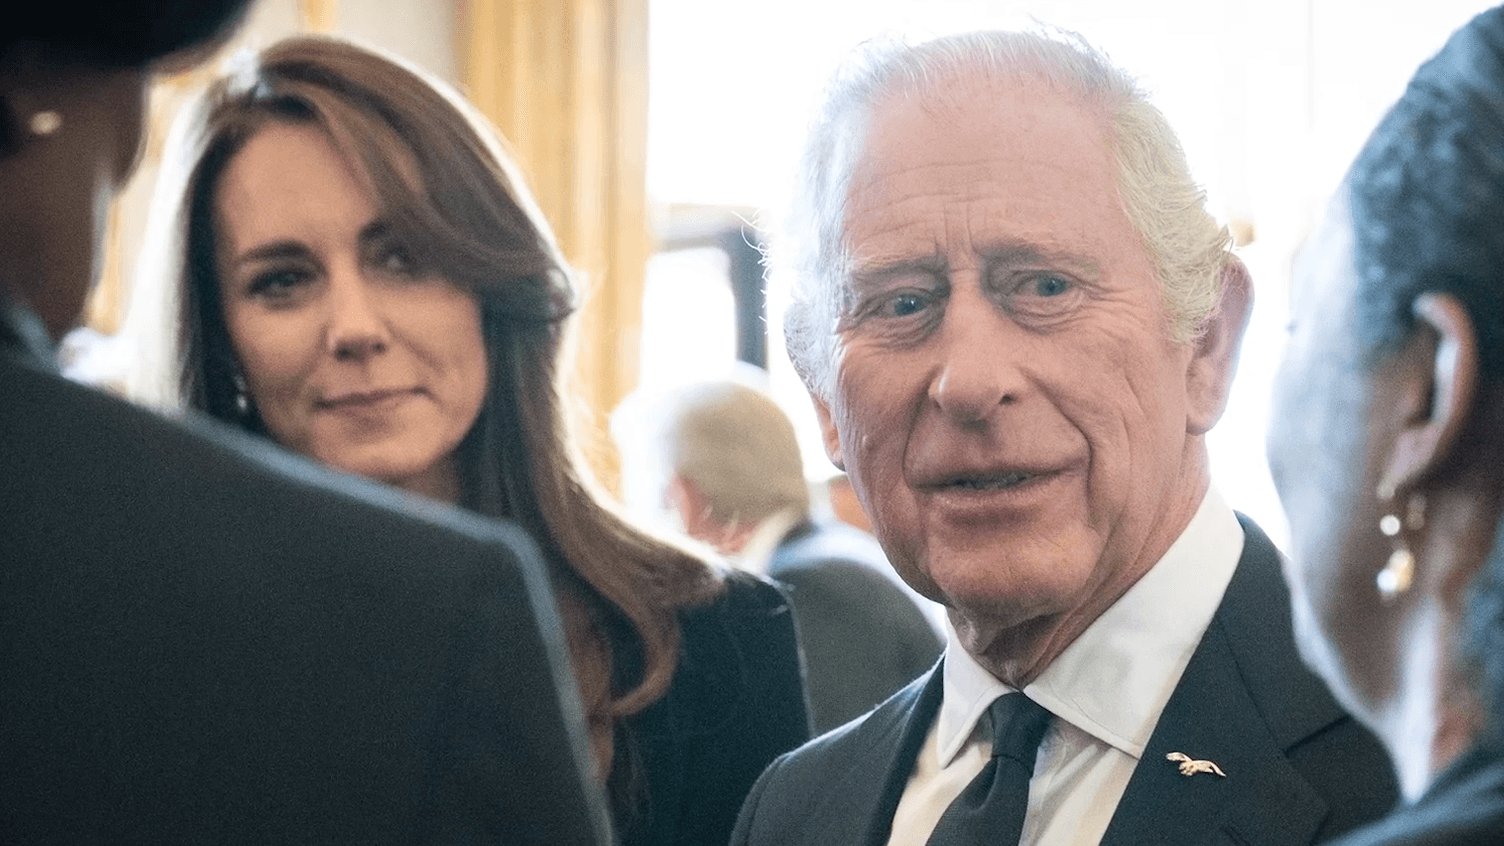 Prinzessin Kate hat Krebs: König Charles III. äußert sich